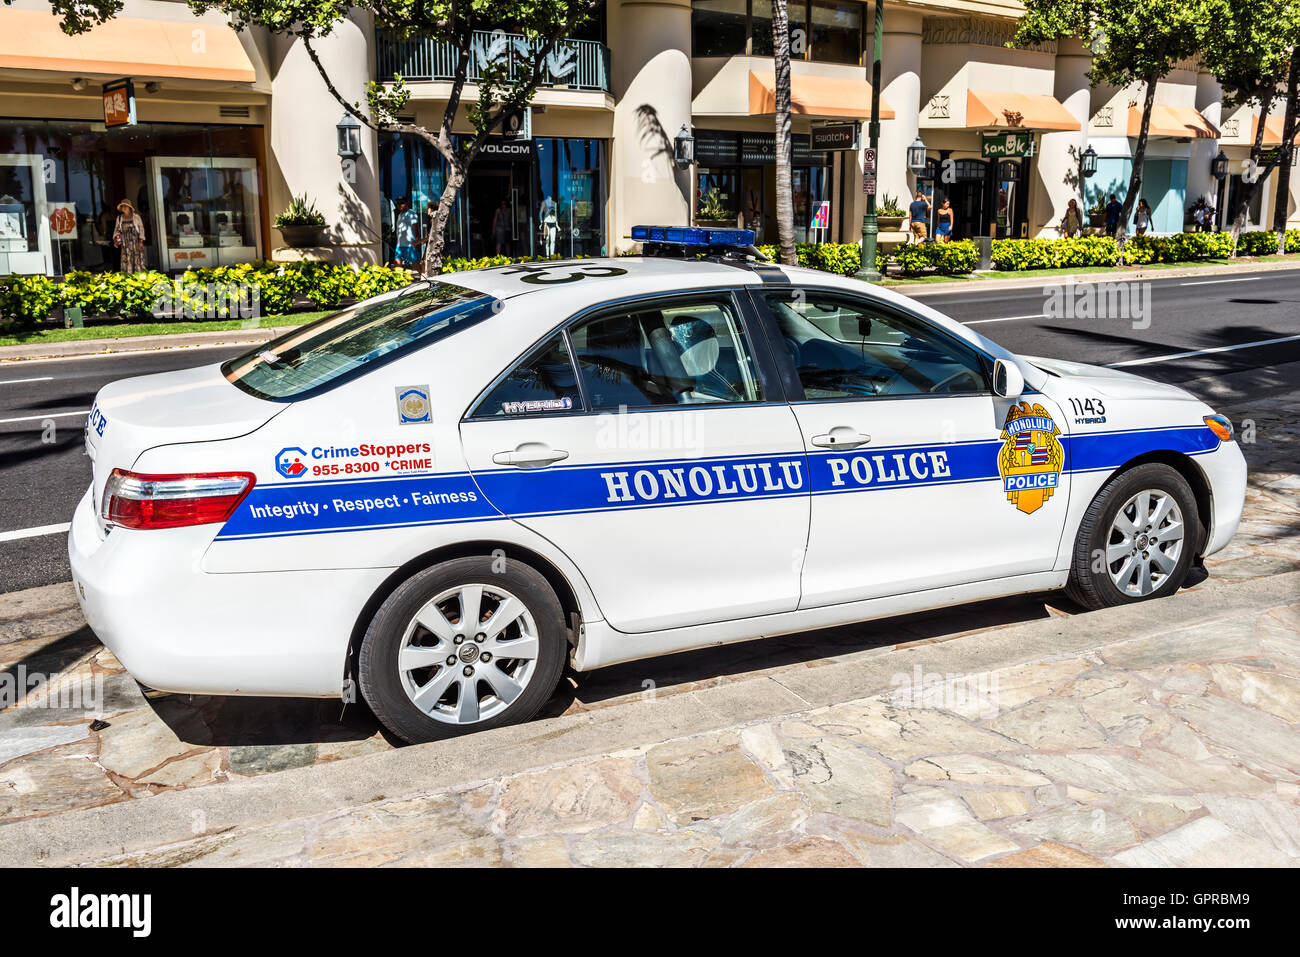 Honolulu Police Department car parked in Waikiki, Honolulu, Hawaii, USA Stock Photo